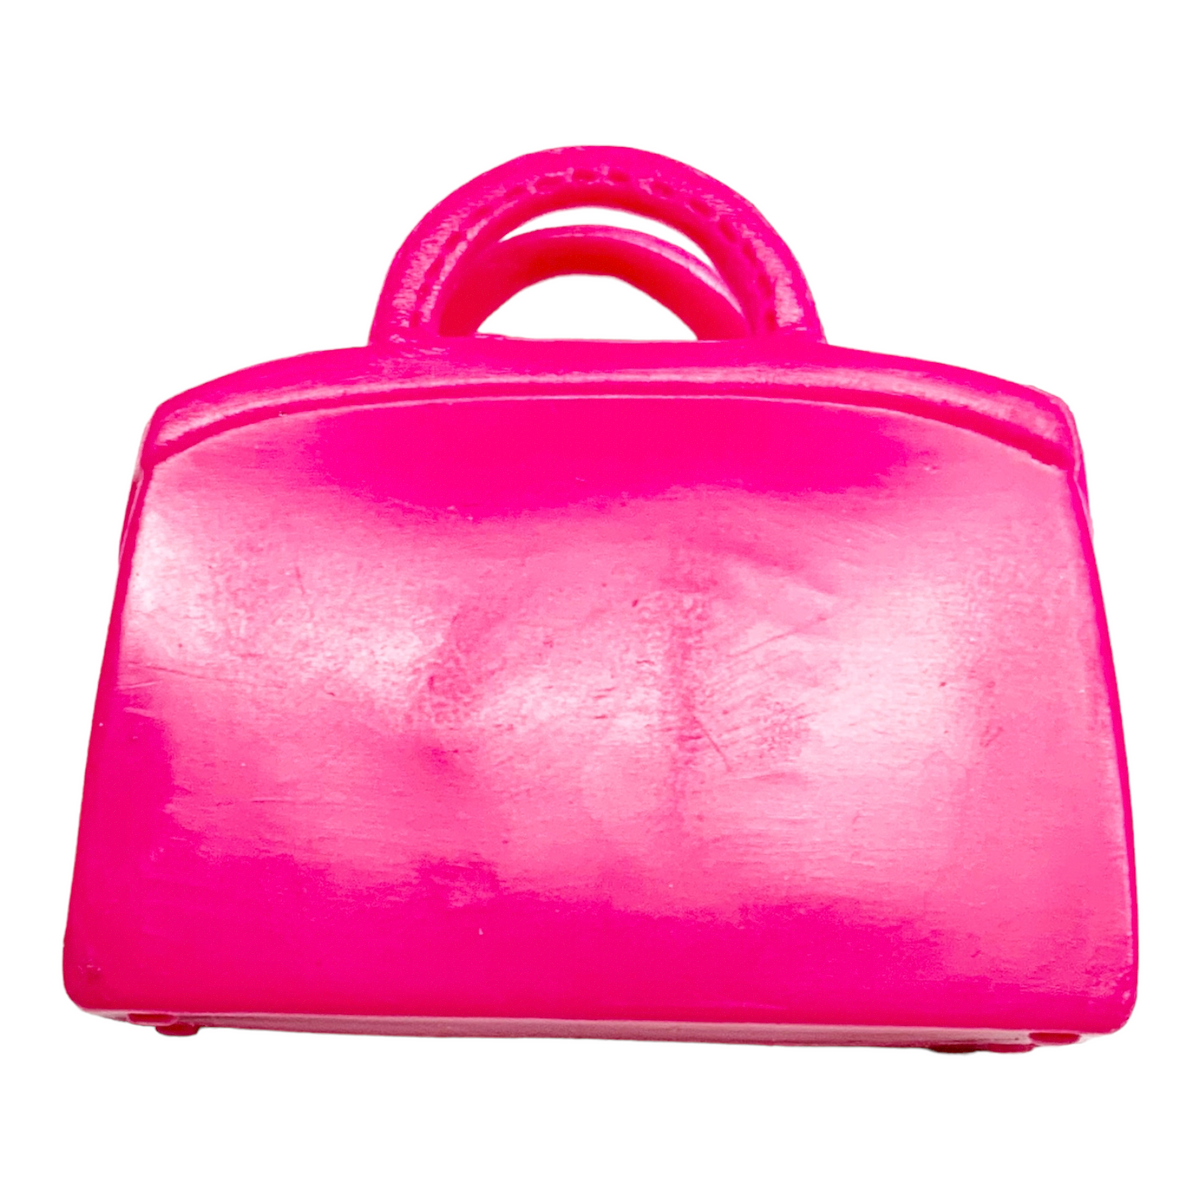 Vintage 1950s Pink Vinyl Handbag Purse 50s Color and Style